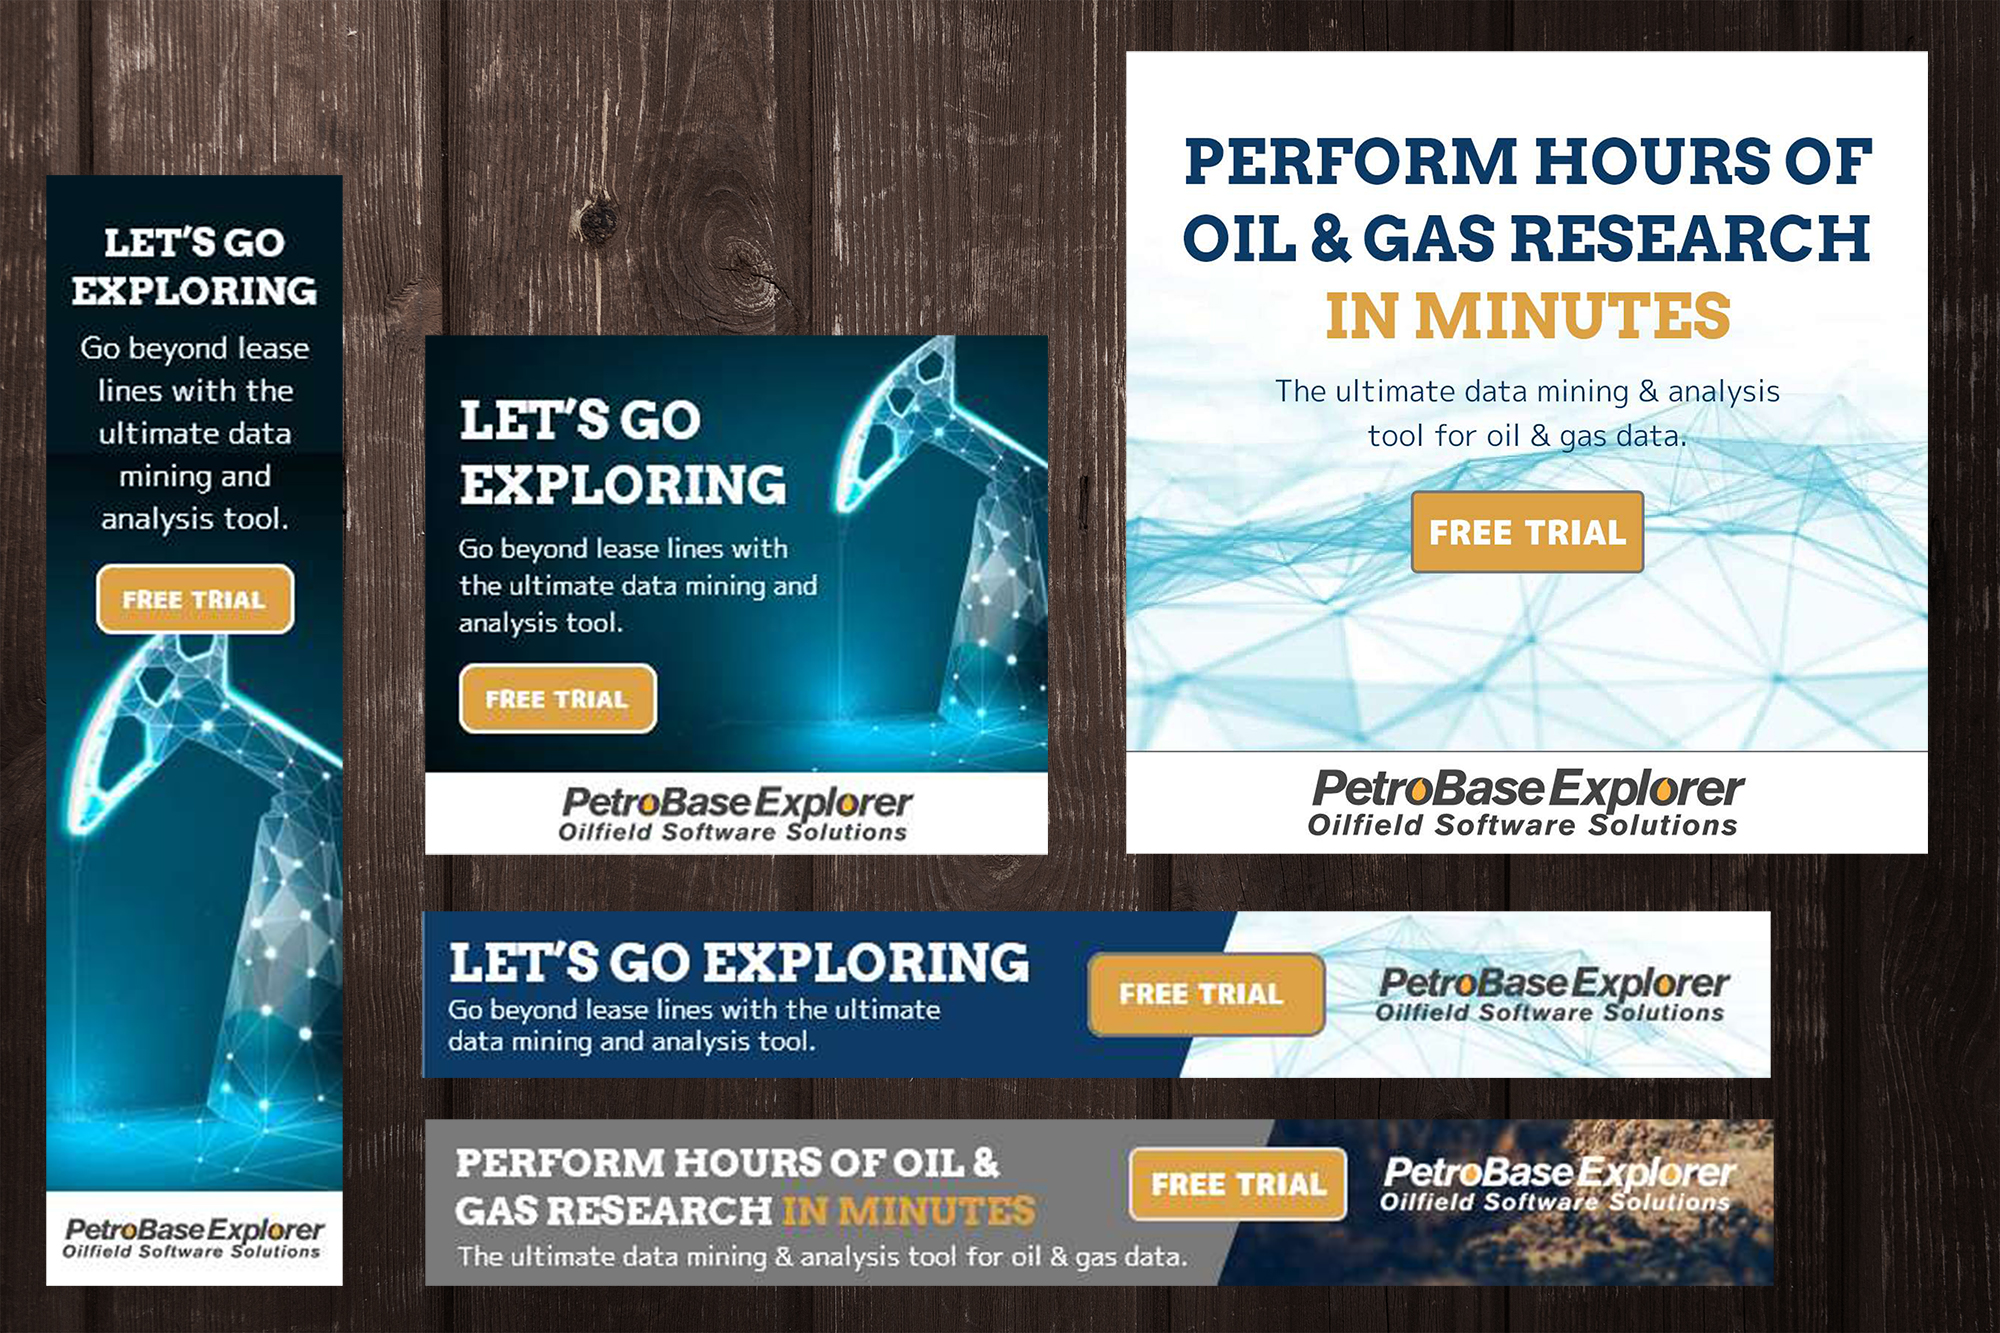 PetroBase